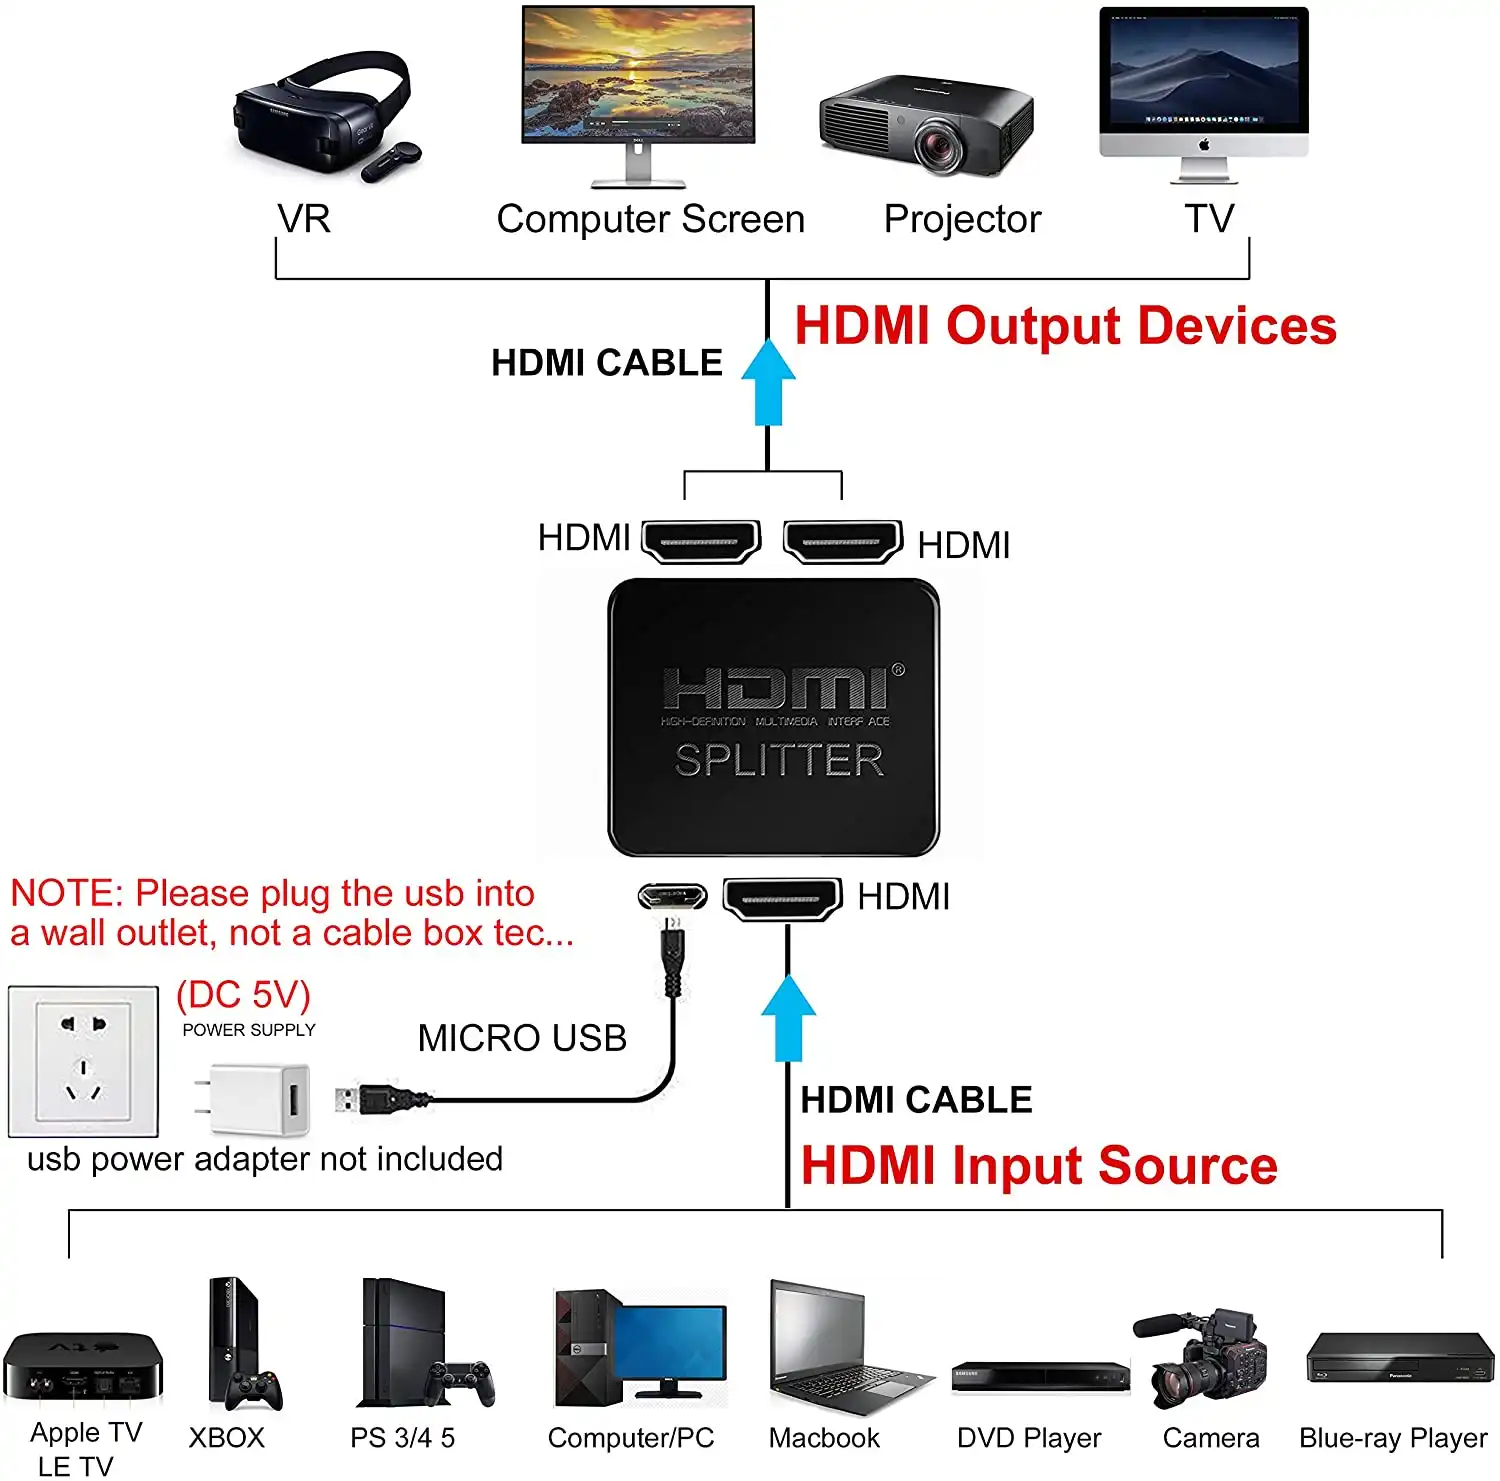 OZF2 1x2 HDMI ספליטר 1 ב 2 מתוך להאריך תצוגת 1 כדי 2 מגבר בצגים כפולים מלא HD 1080P 3D לבוא